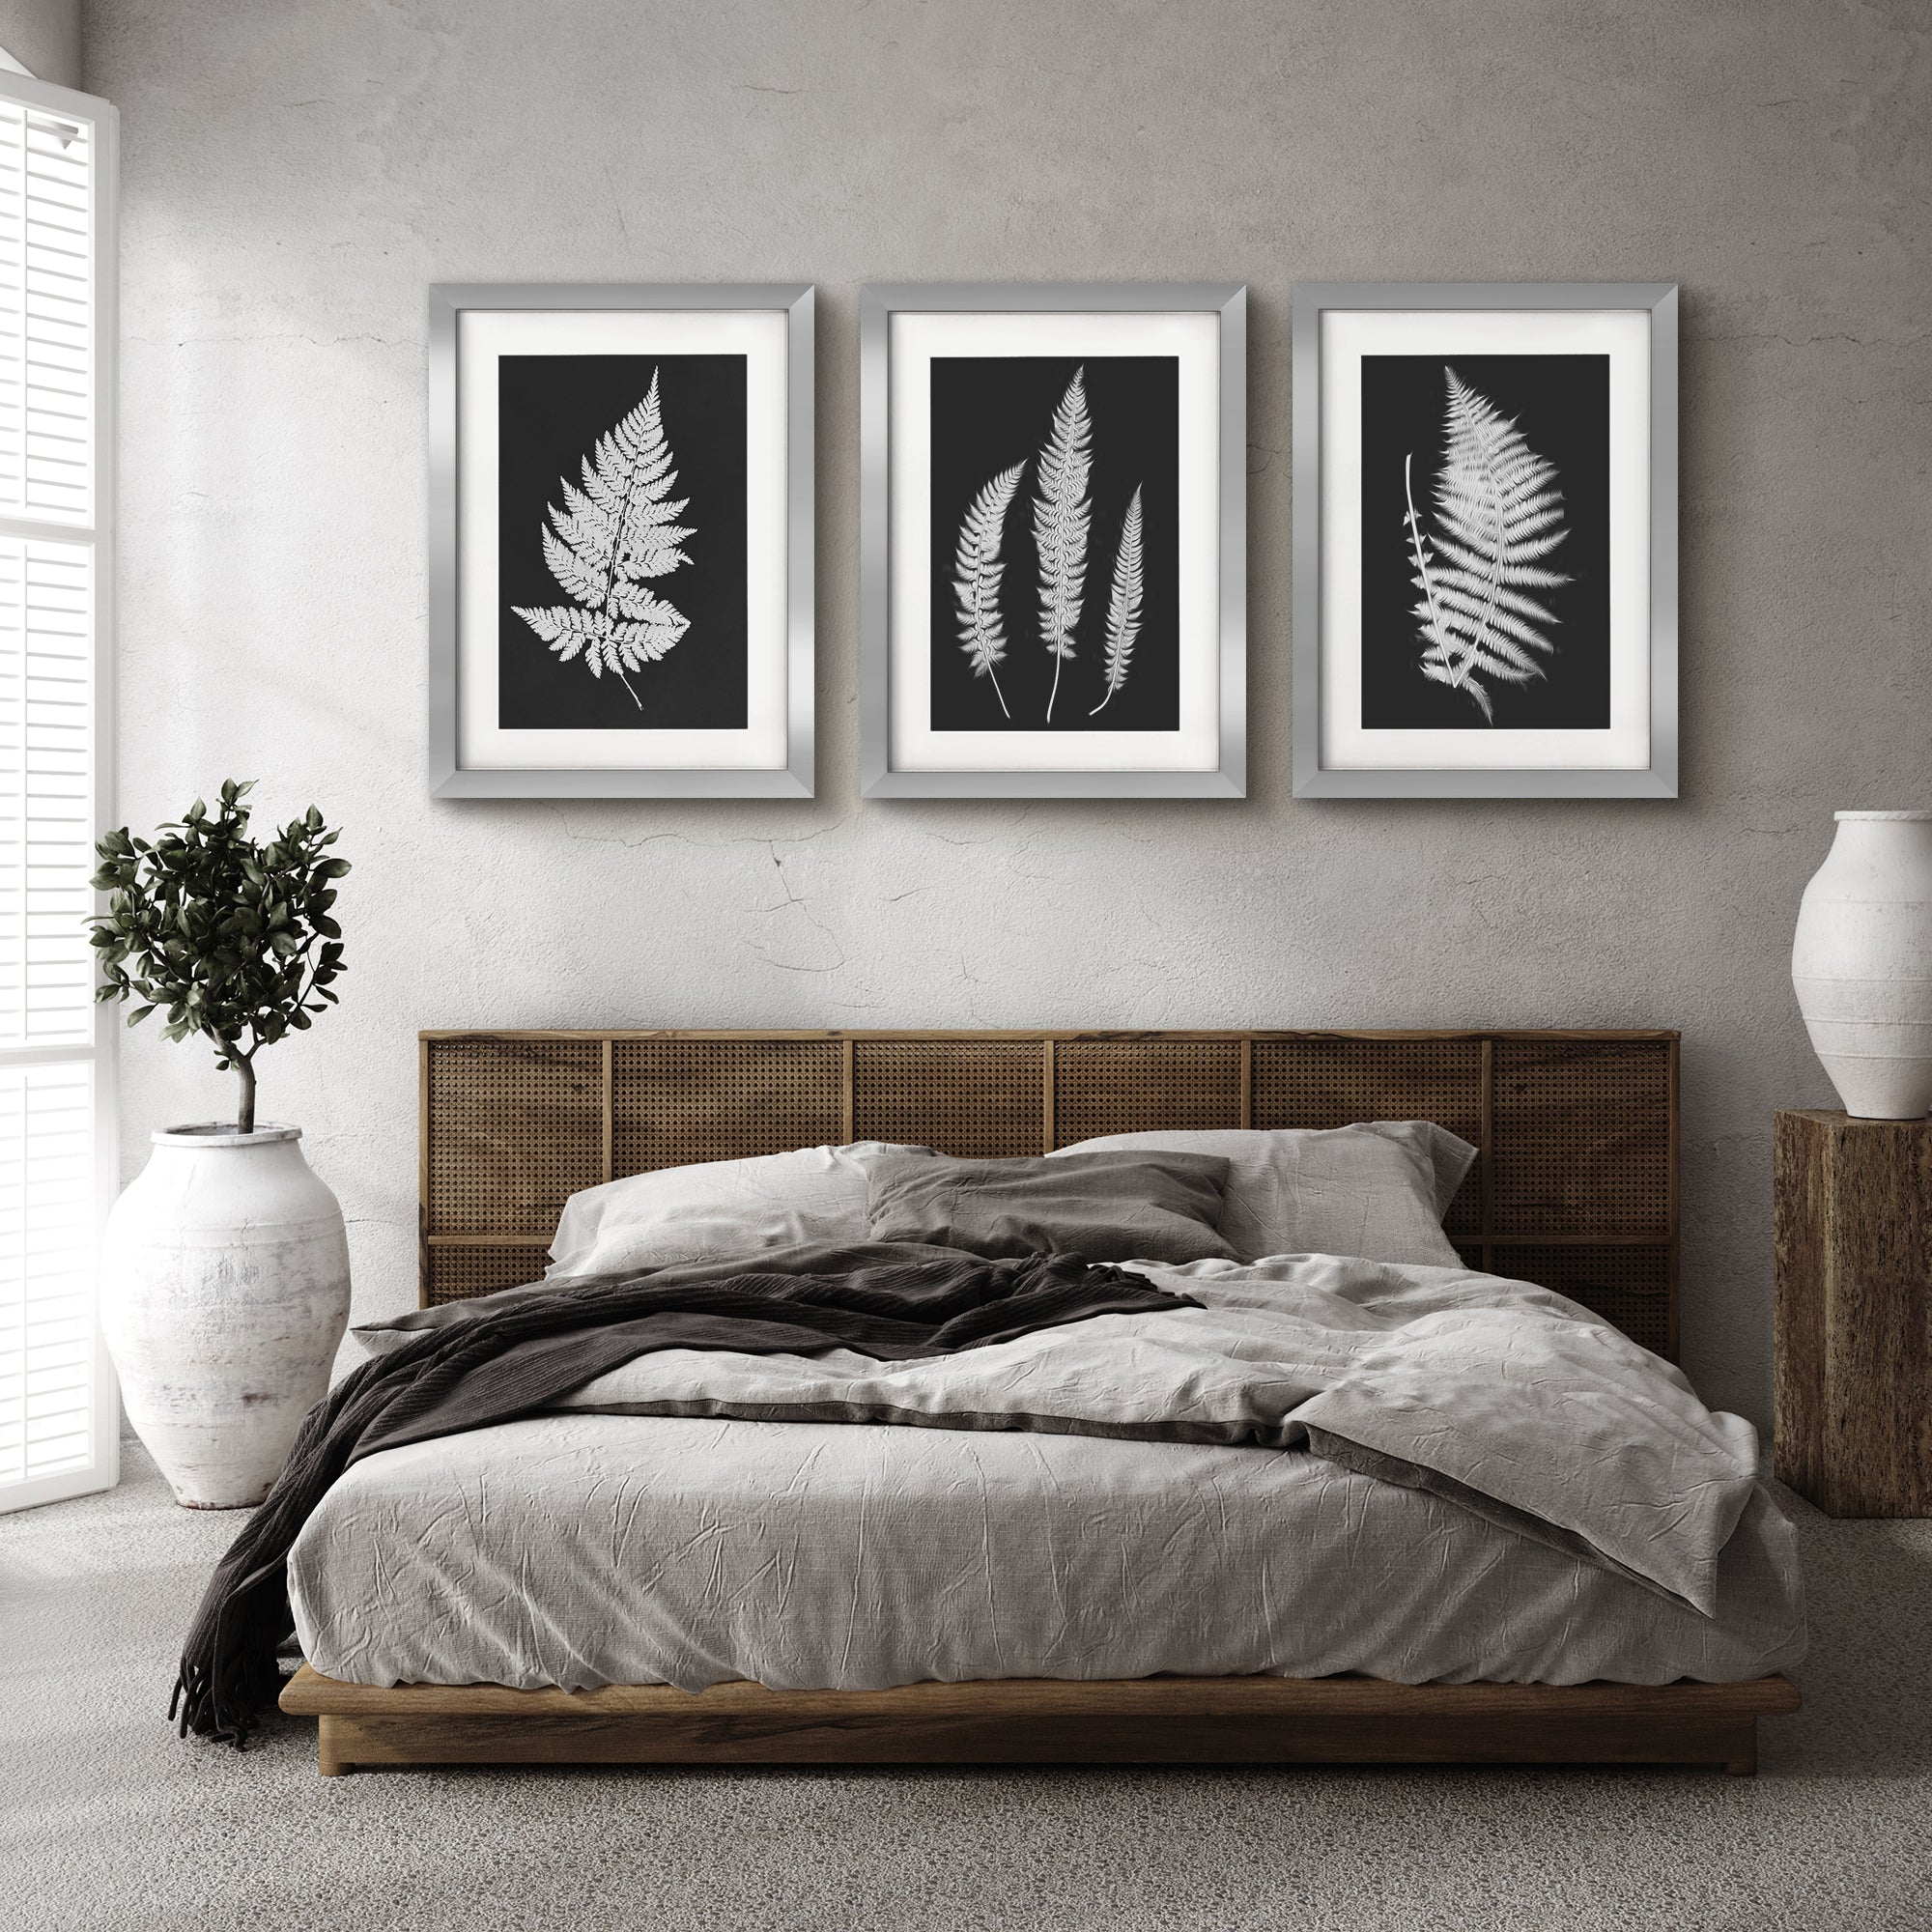 Black and White Botanicals by Chaos & Wonder Design - 3 Piece Gallery  Framed Print Art Set